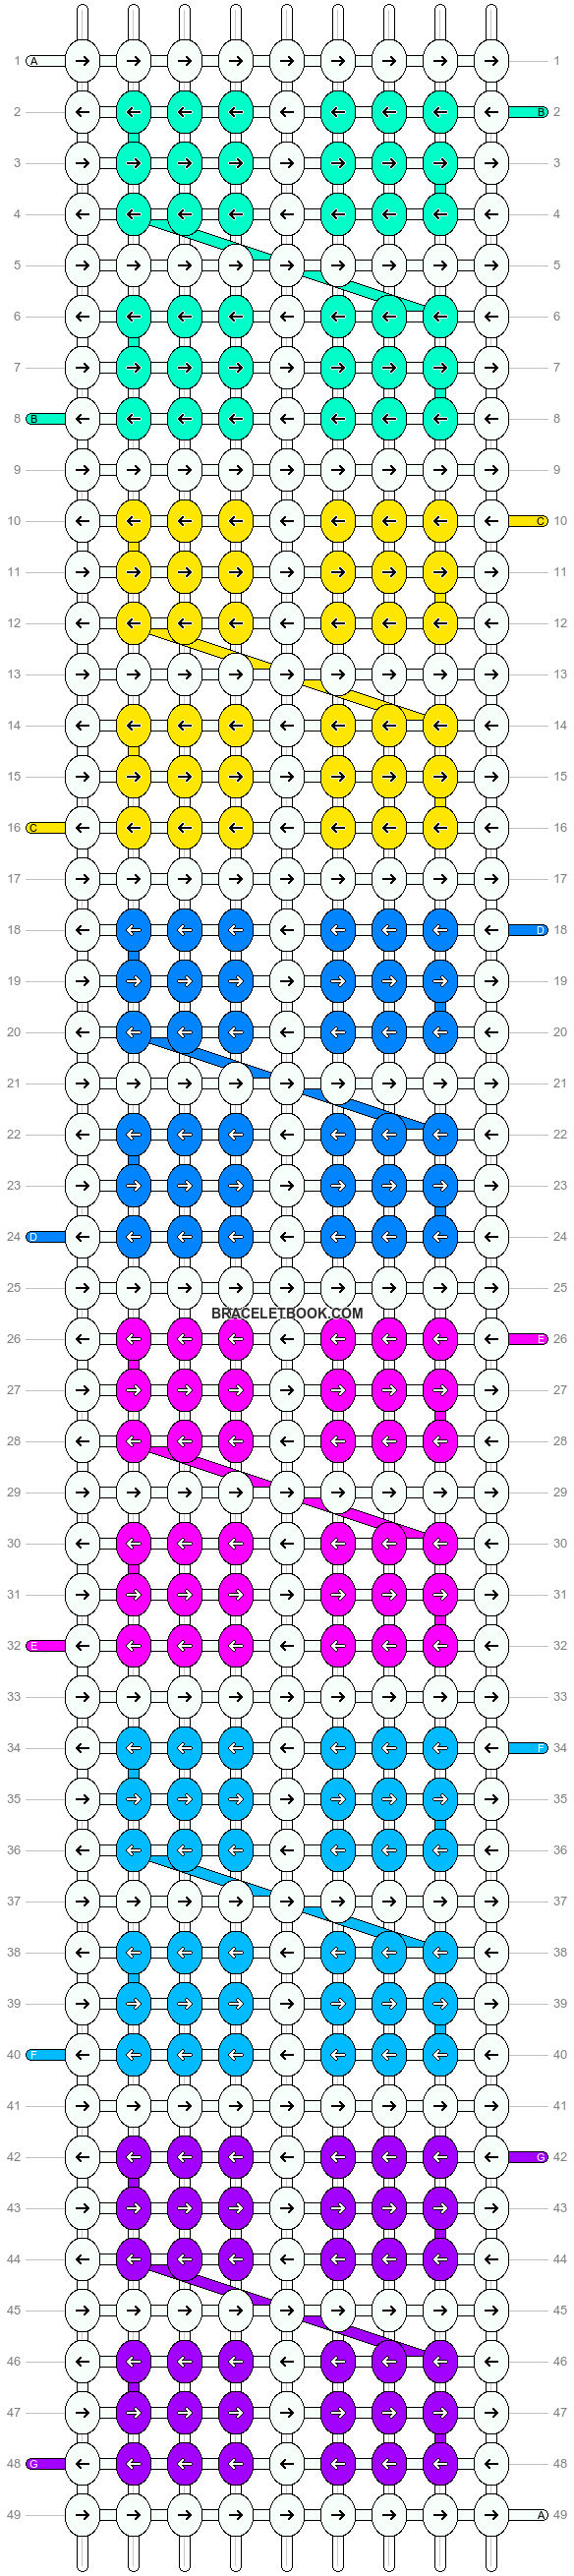 Alpha pattern #17916 variation #27911 pattern